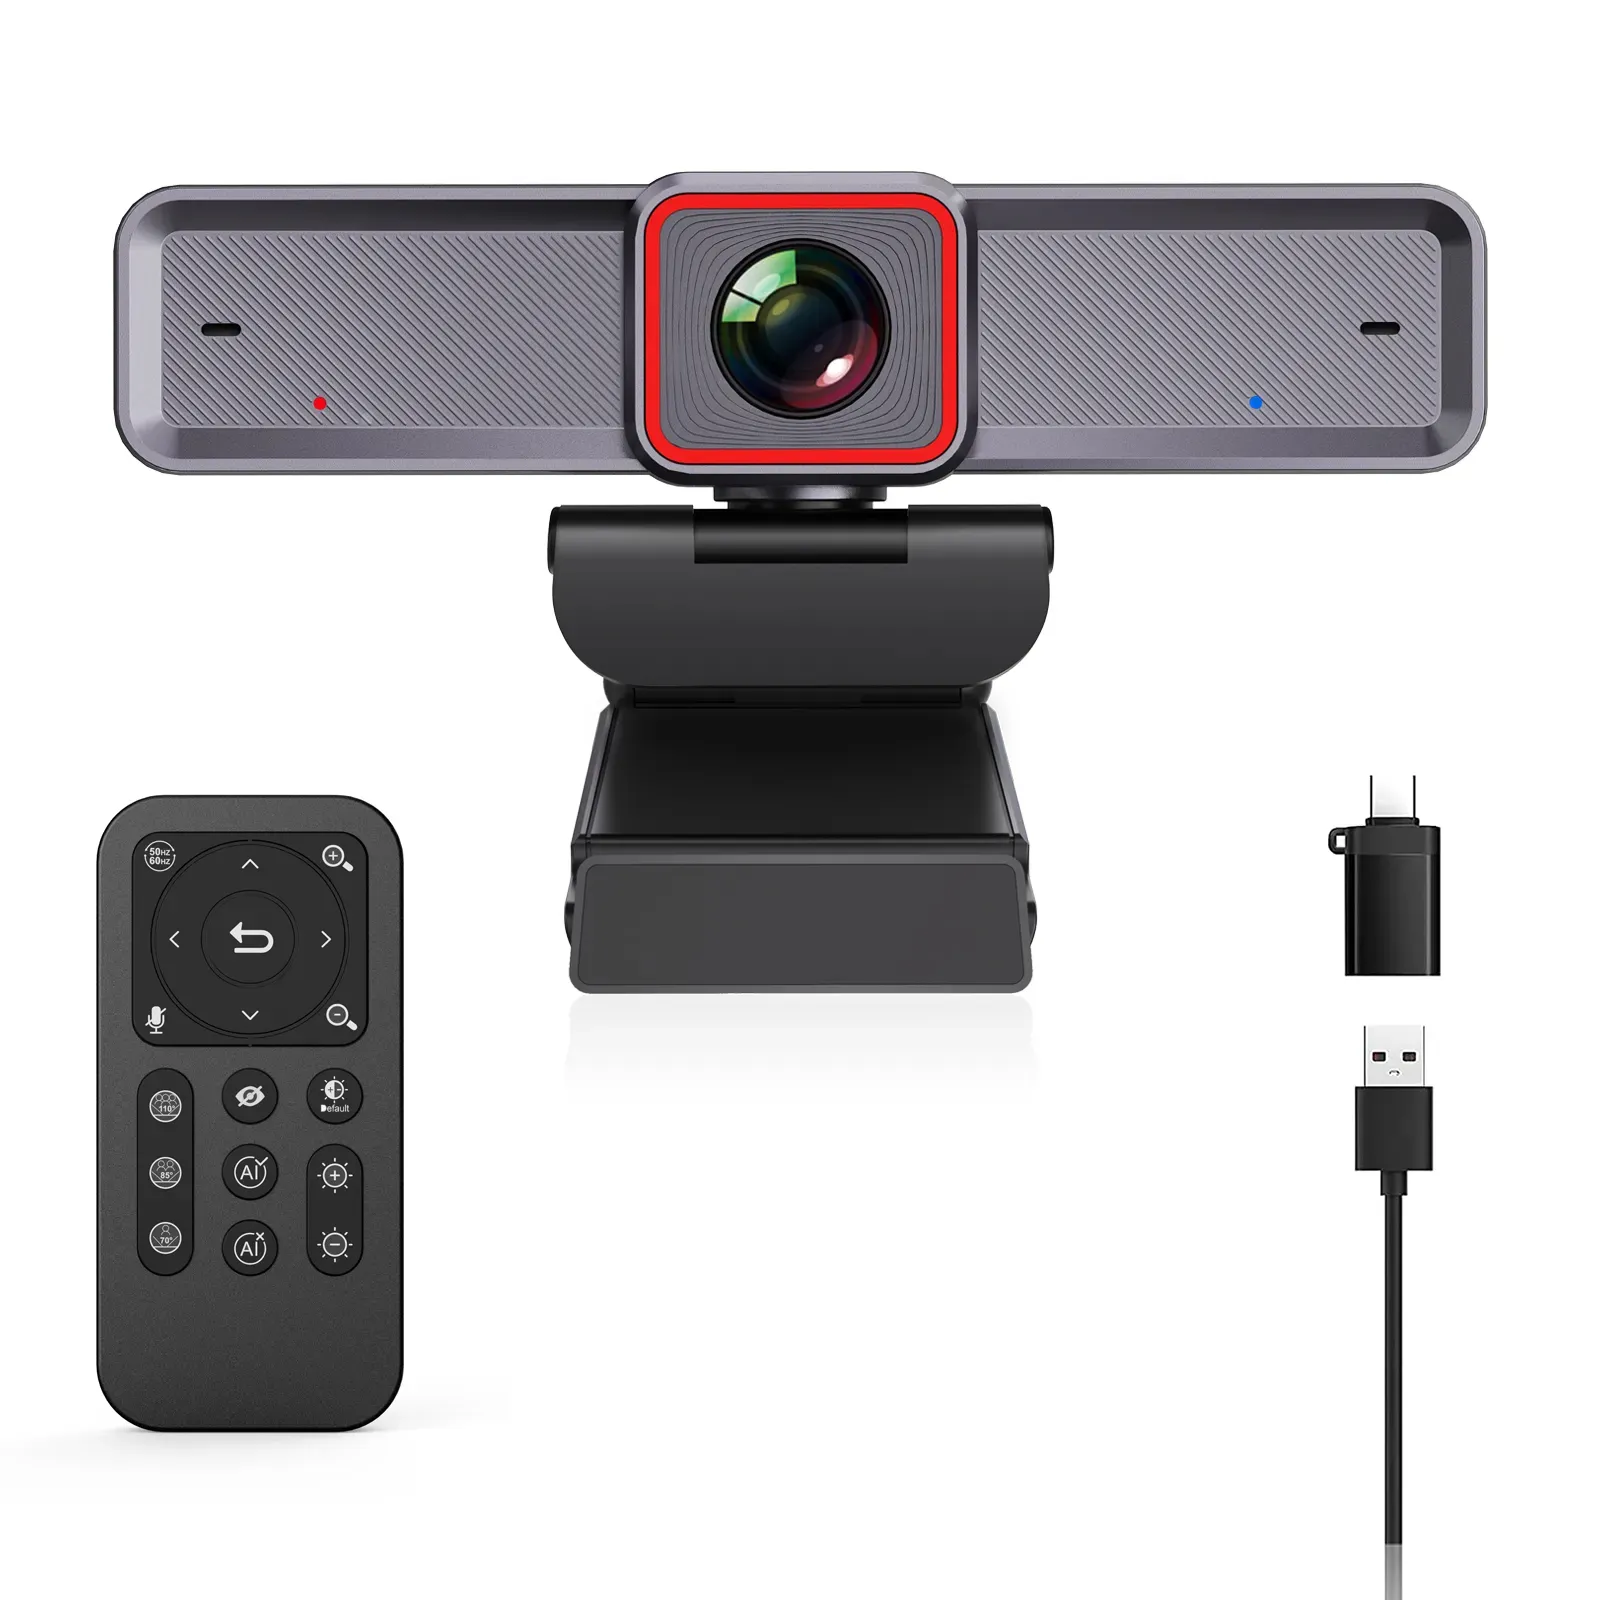 Супер скорость Usb 3,0 соединение 4k Full Hd видео конференц-камера Веб-камера автообрамление 4k веб-камера